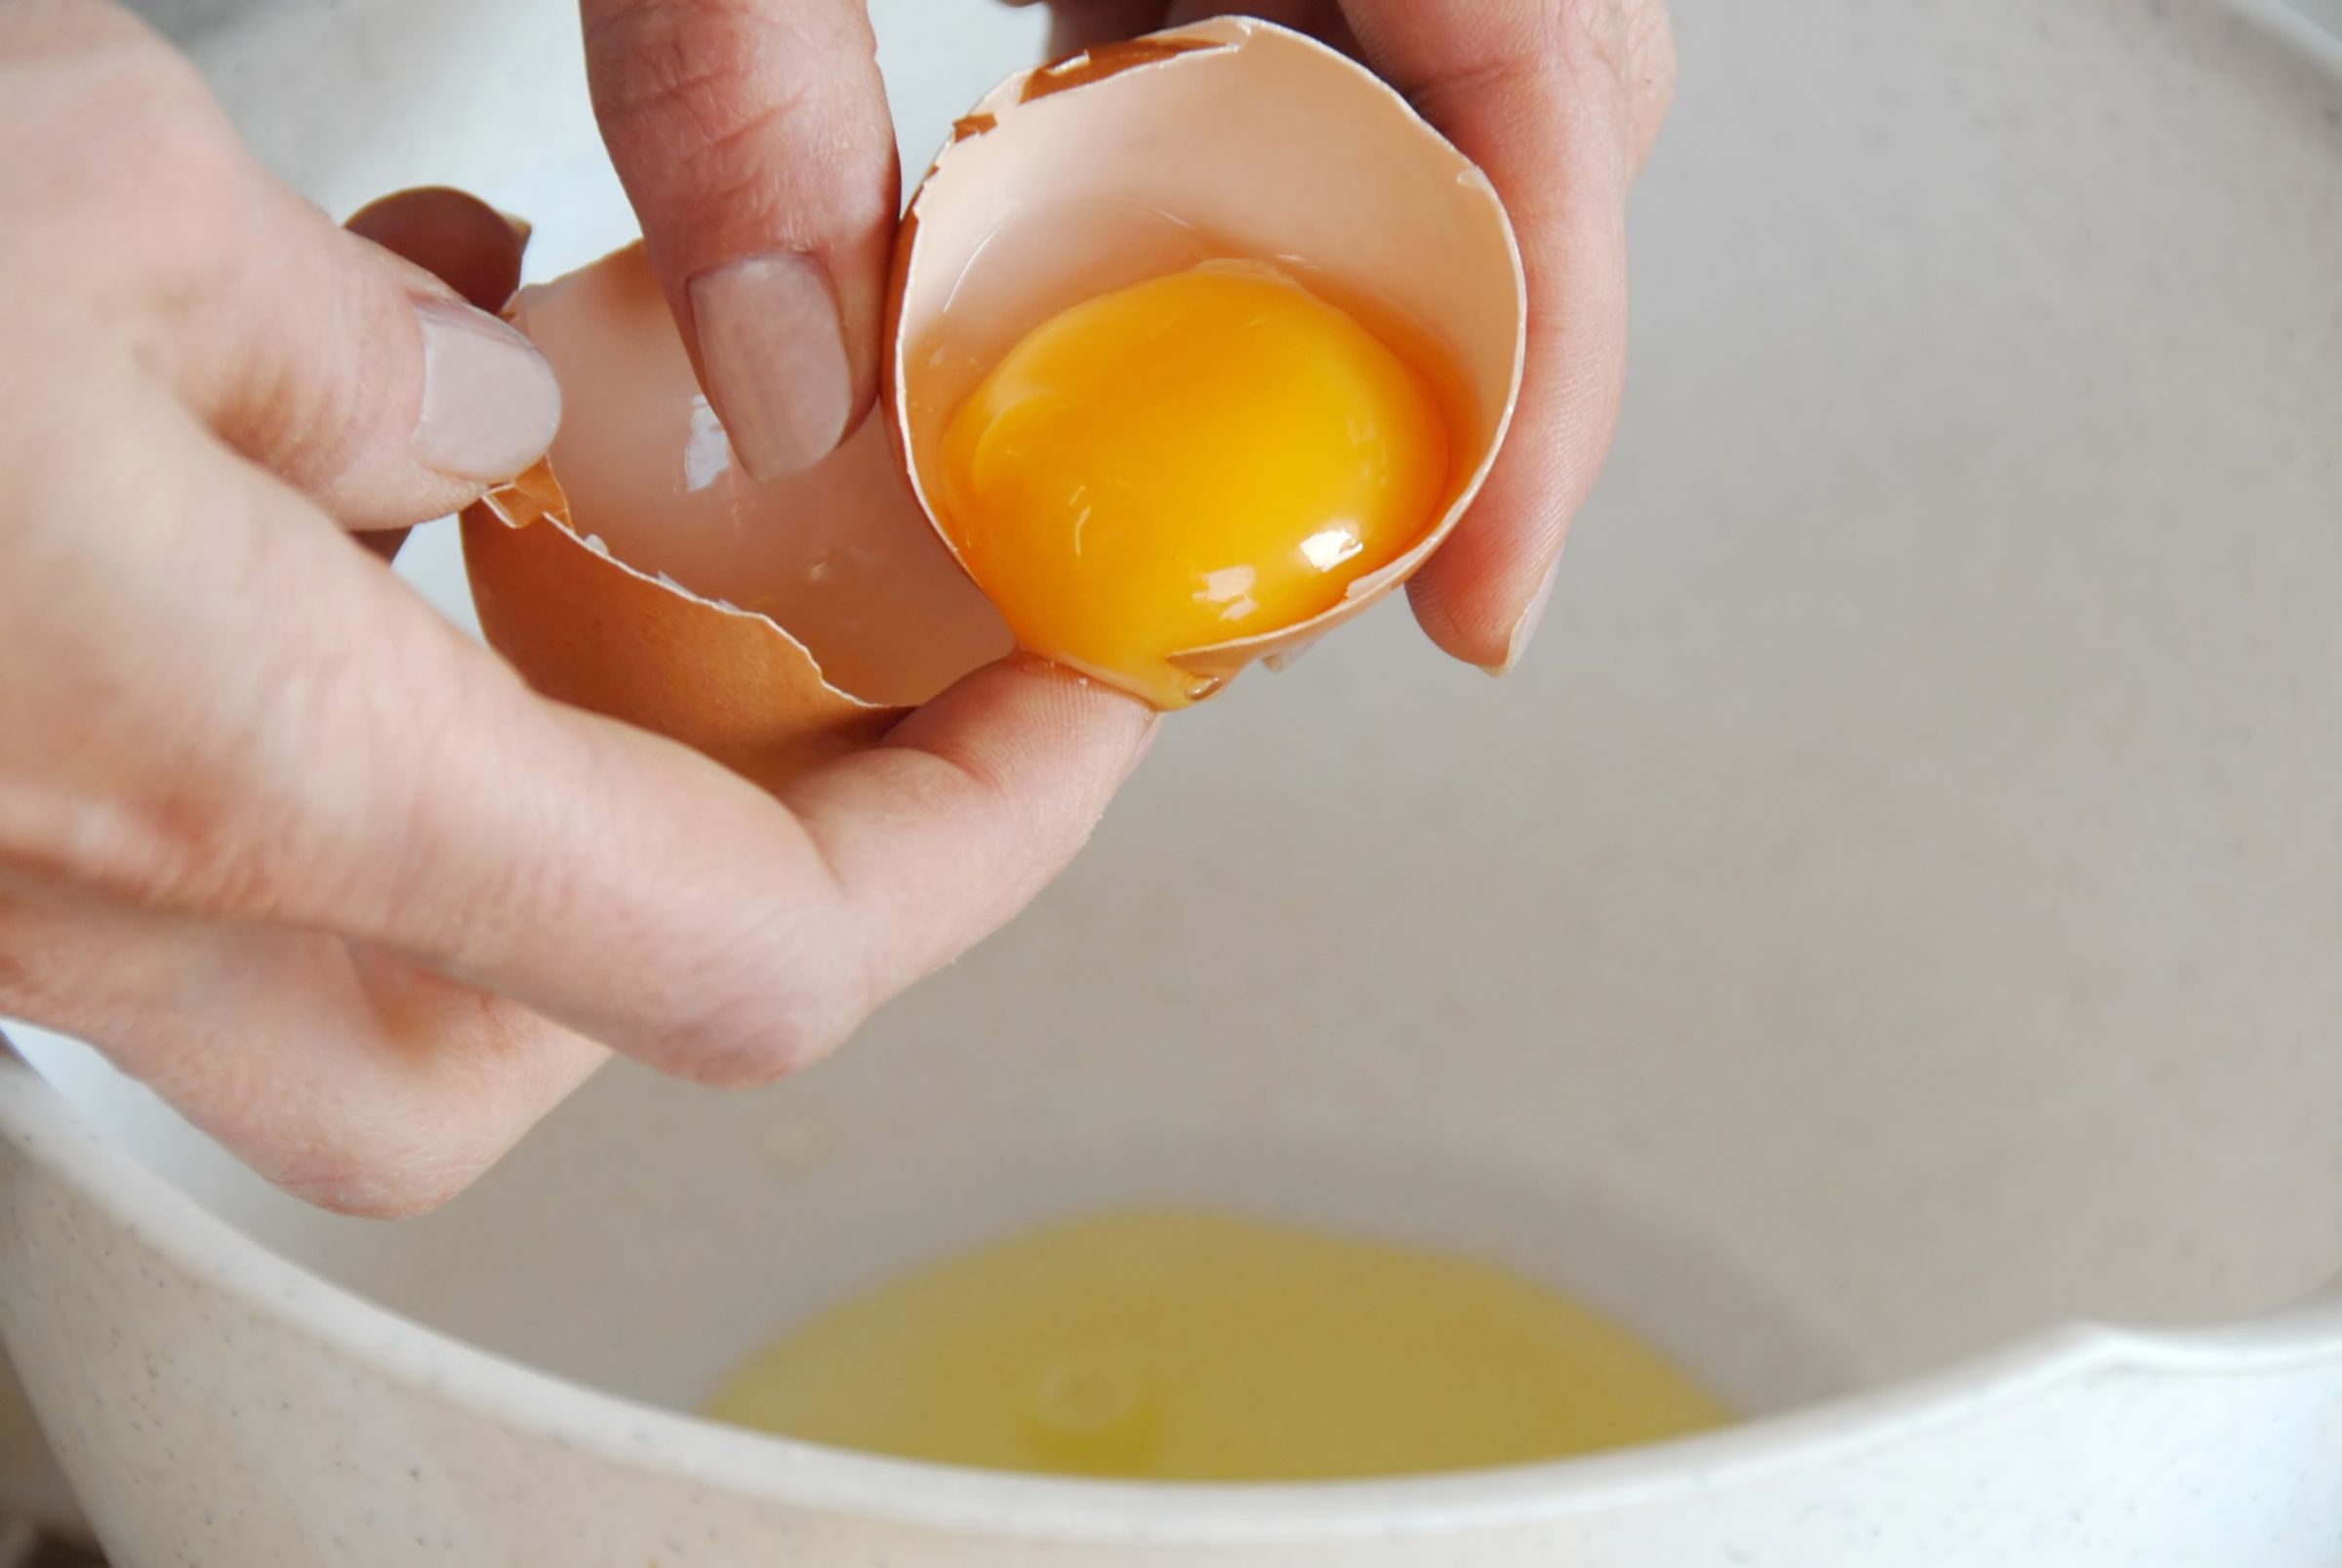 Le uova, ricche di luteina e zeaxantina